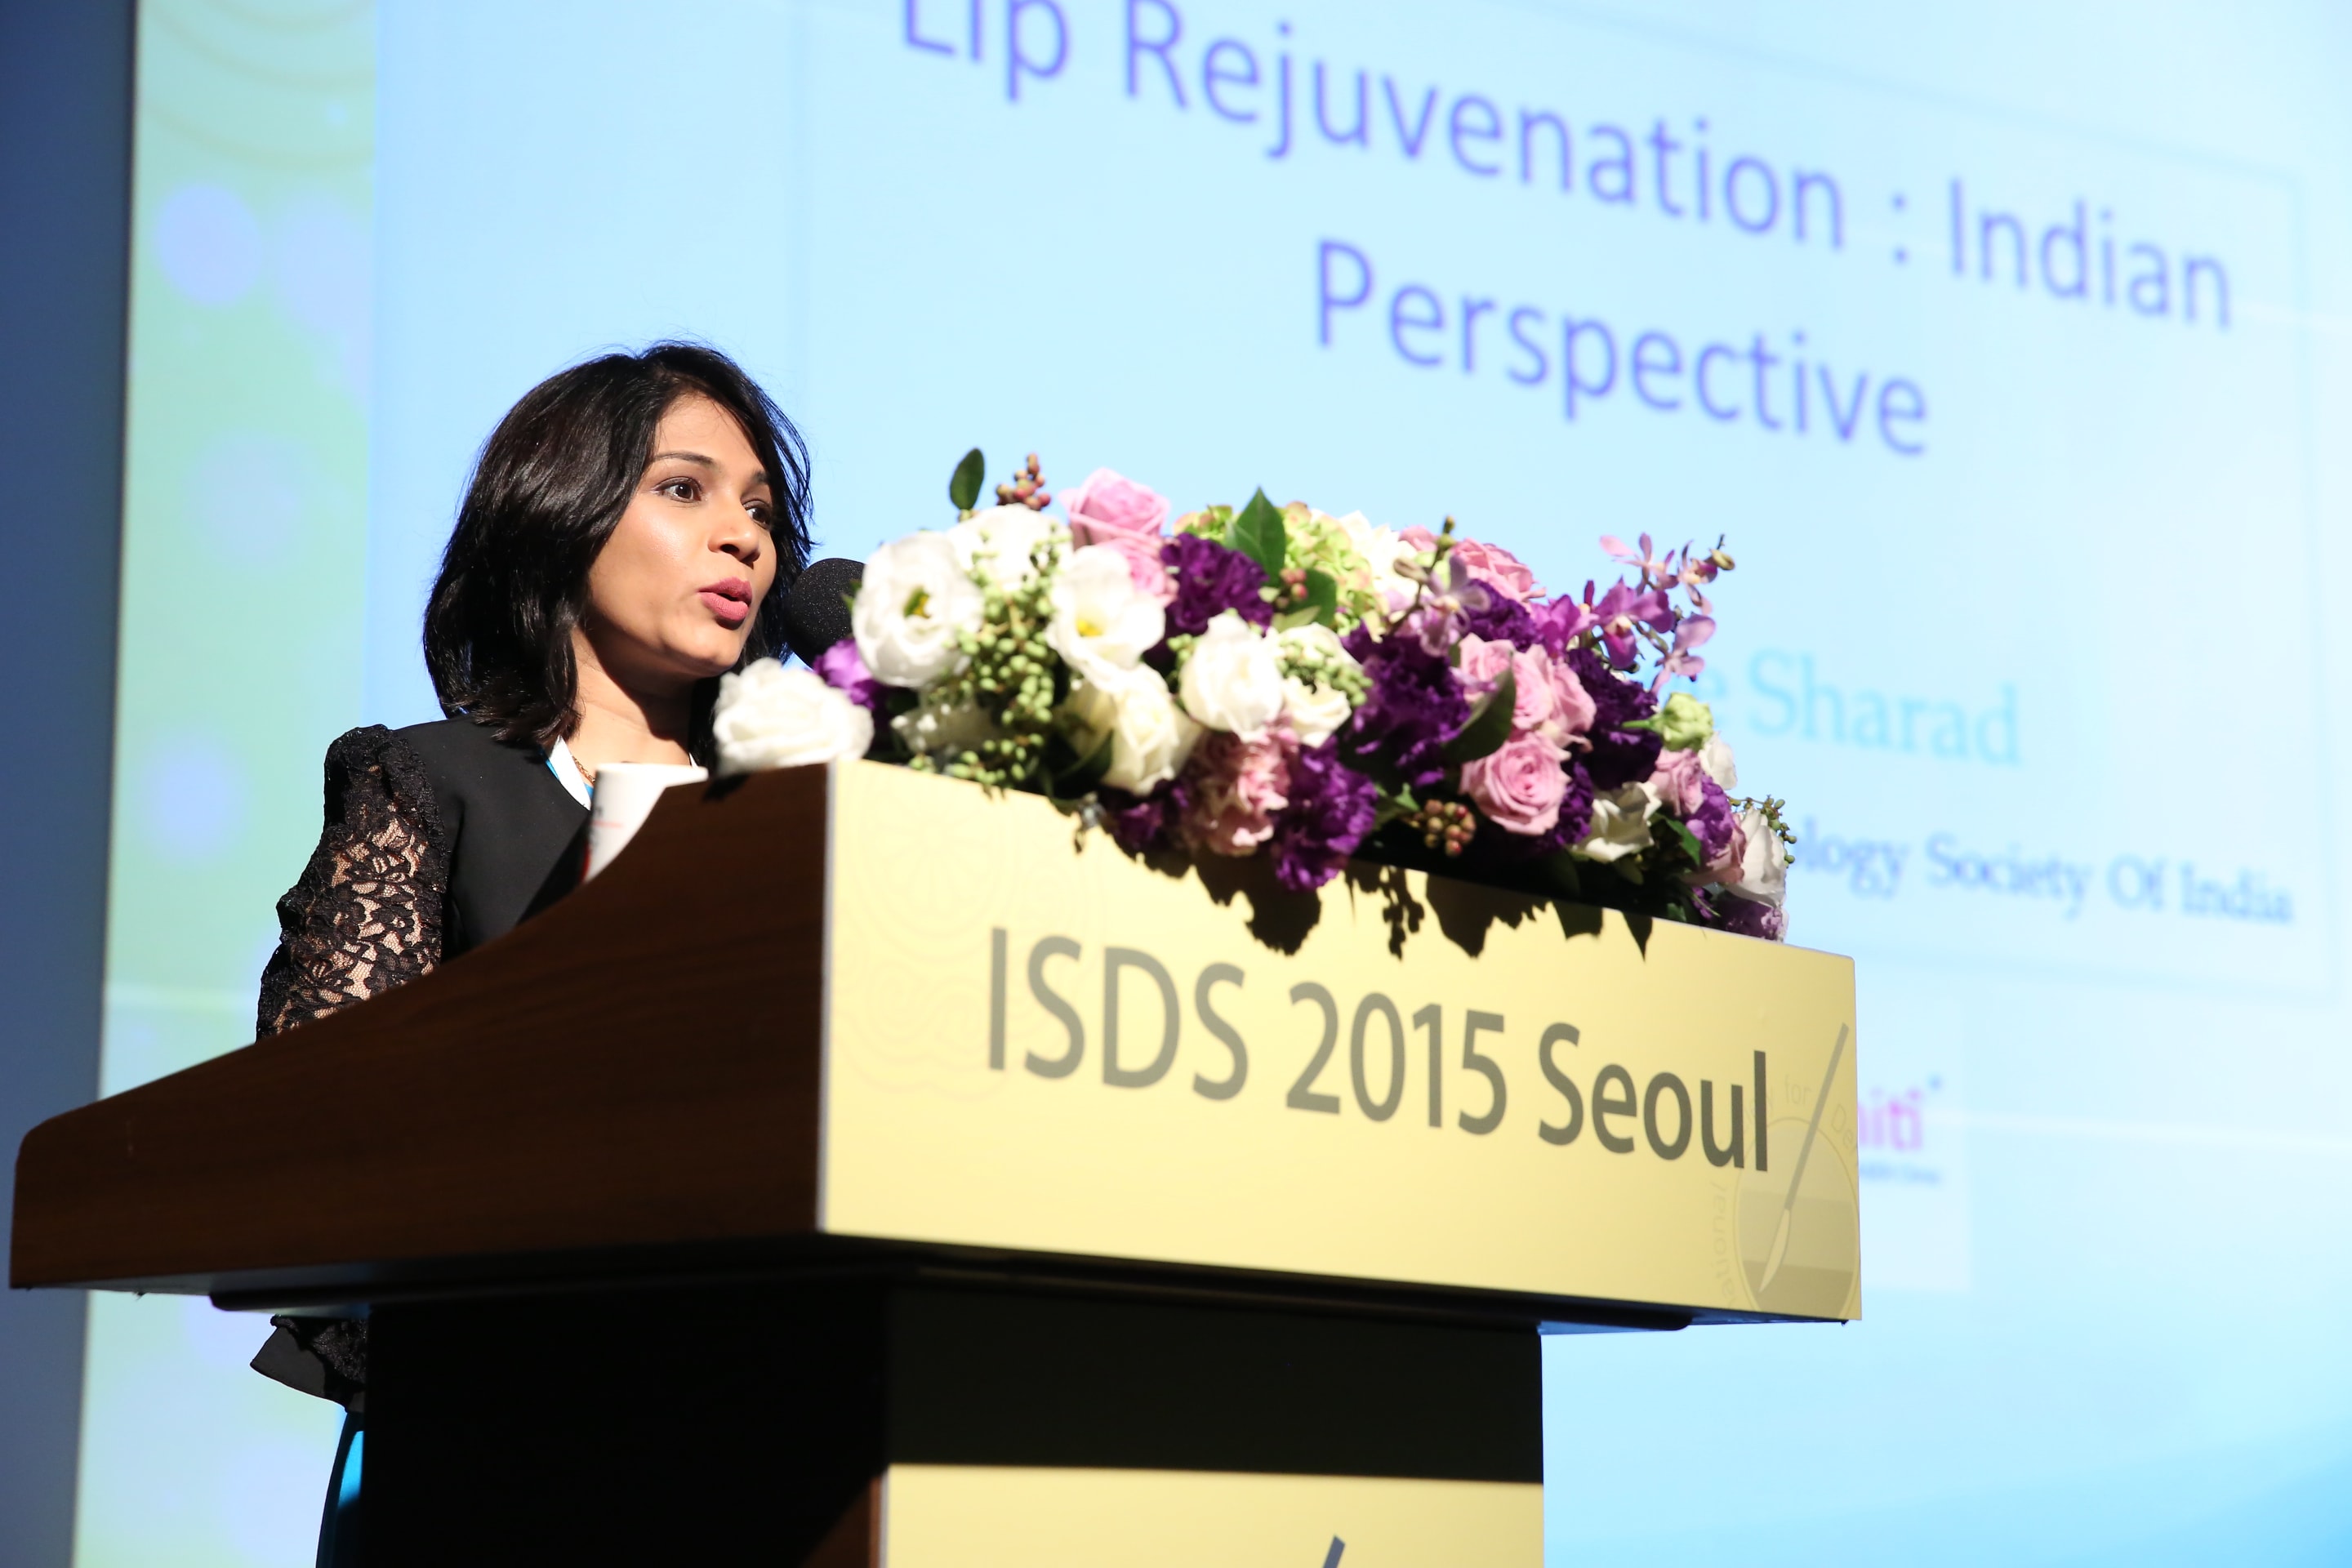 2015 Seoul - International Society For Dermatologic Surgery